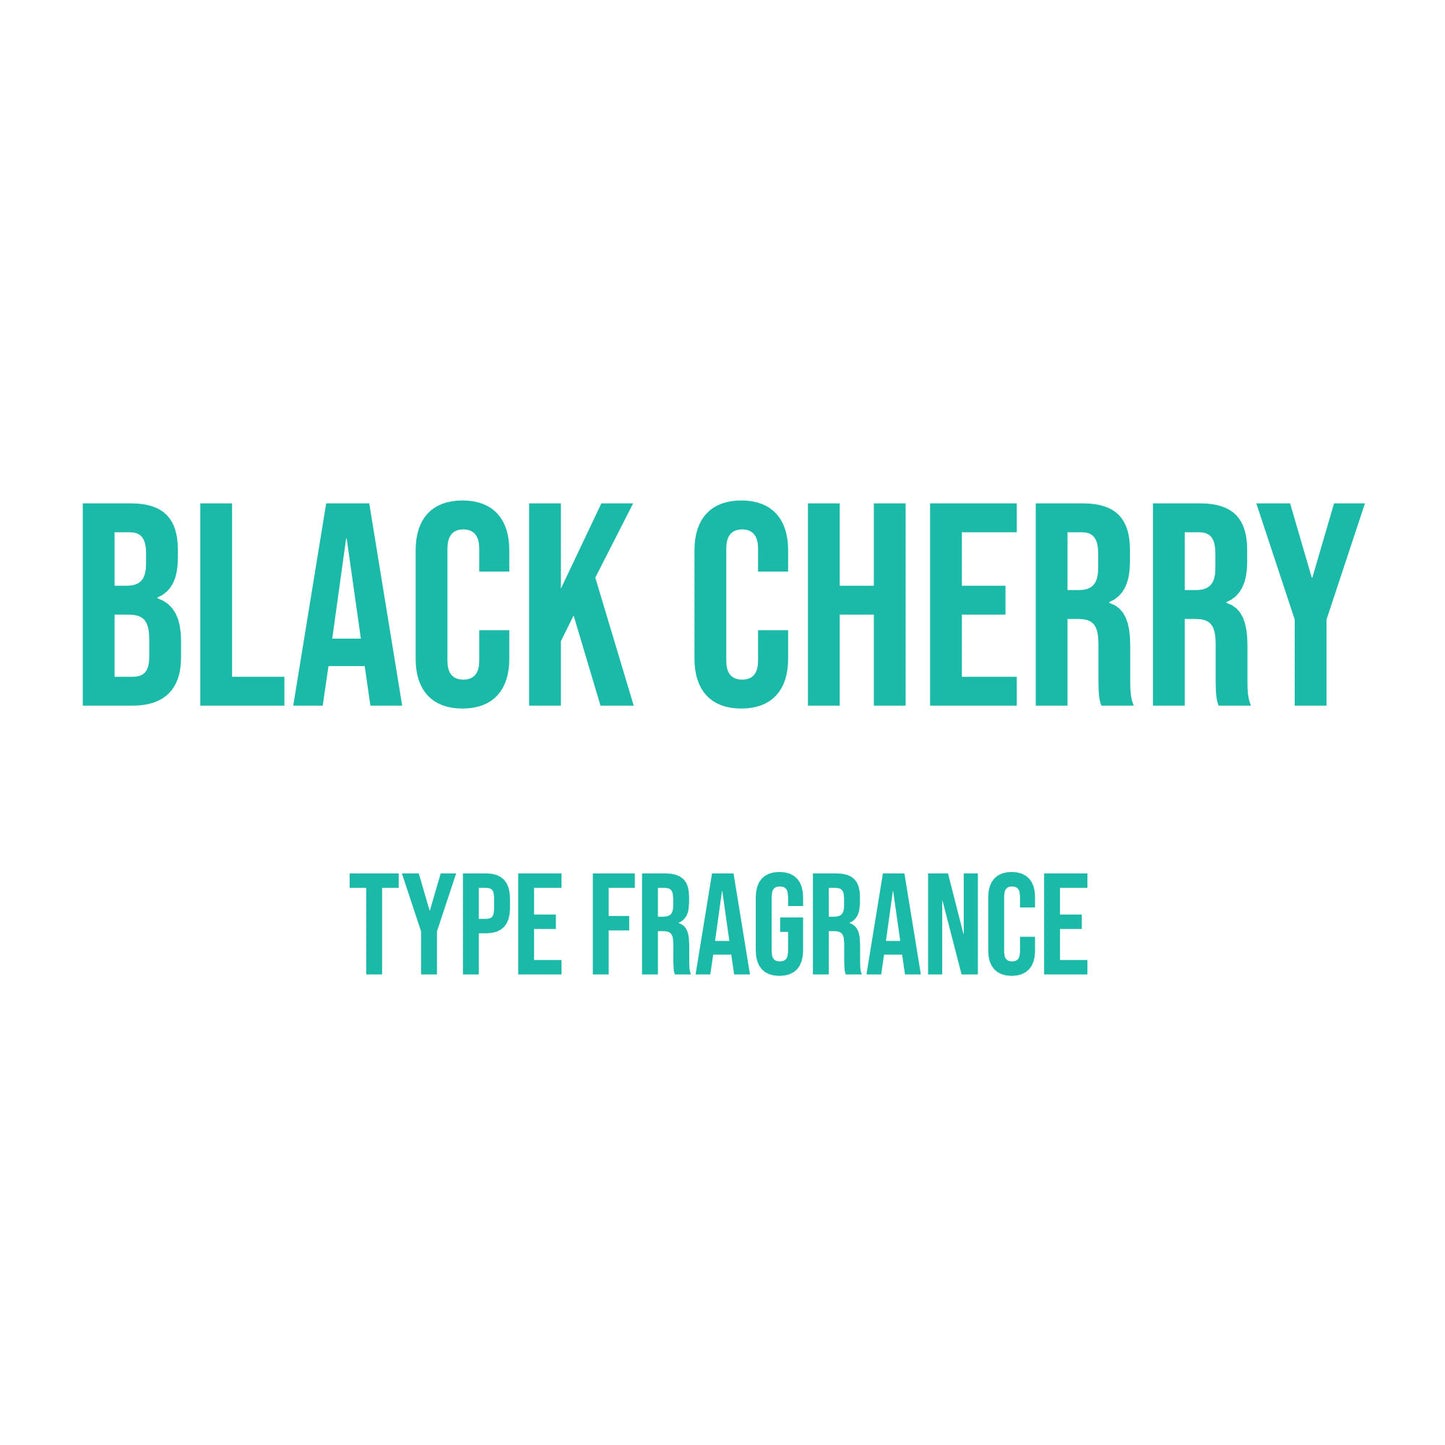 Black Cherry Type Fragrance